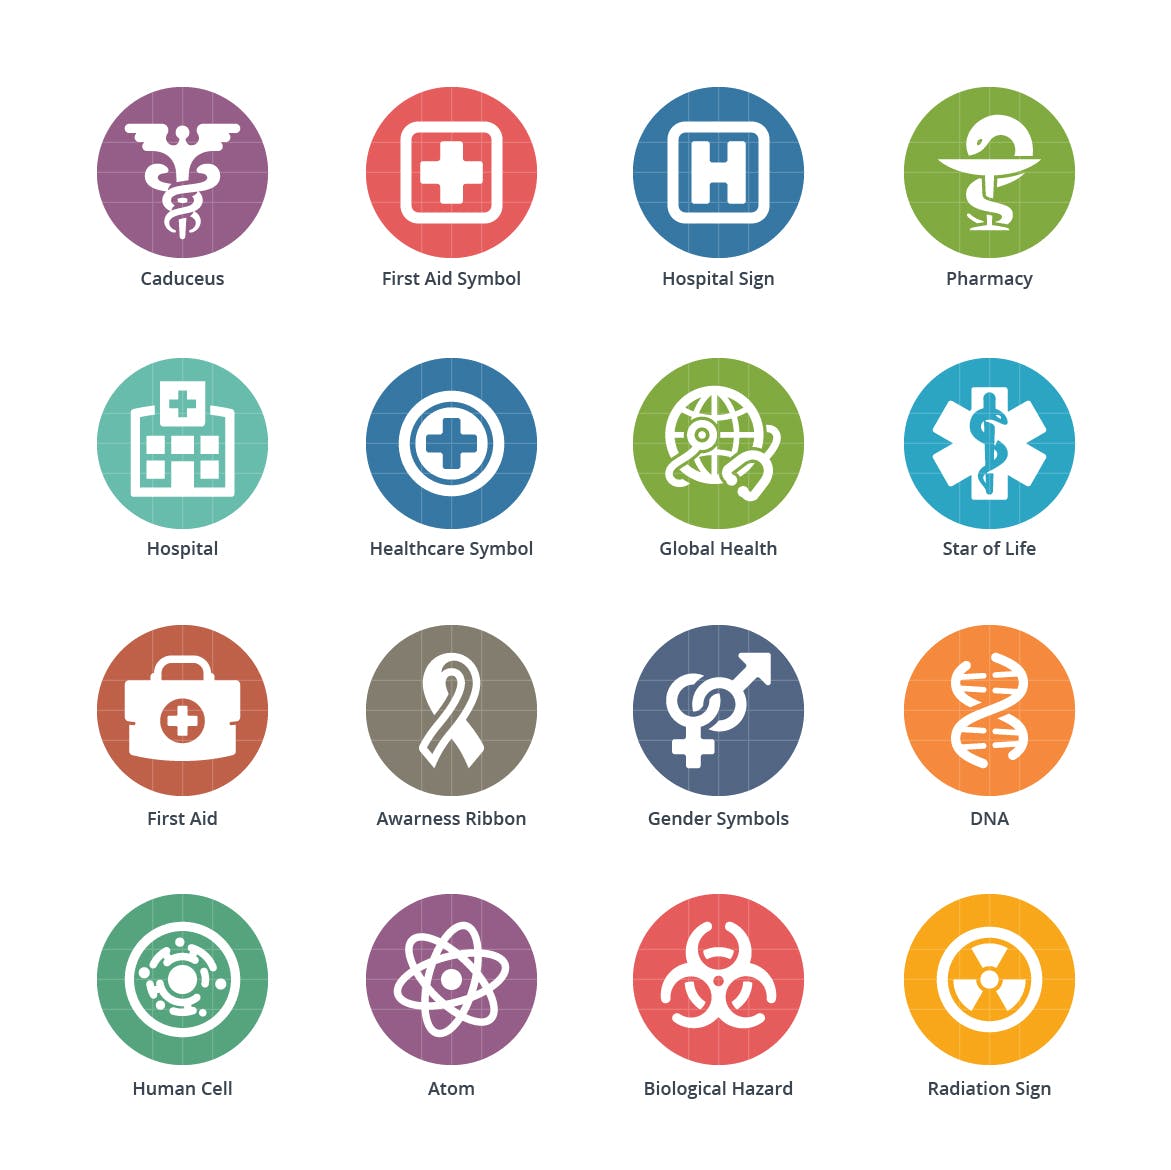 Colored系列-医疗保健主题矢量素材库精选图标集v1 Medical & Health Care Icons Set 1 – Colored Series插图(2)